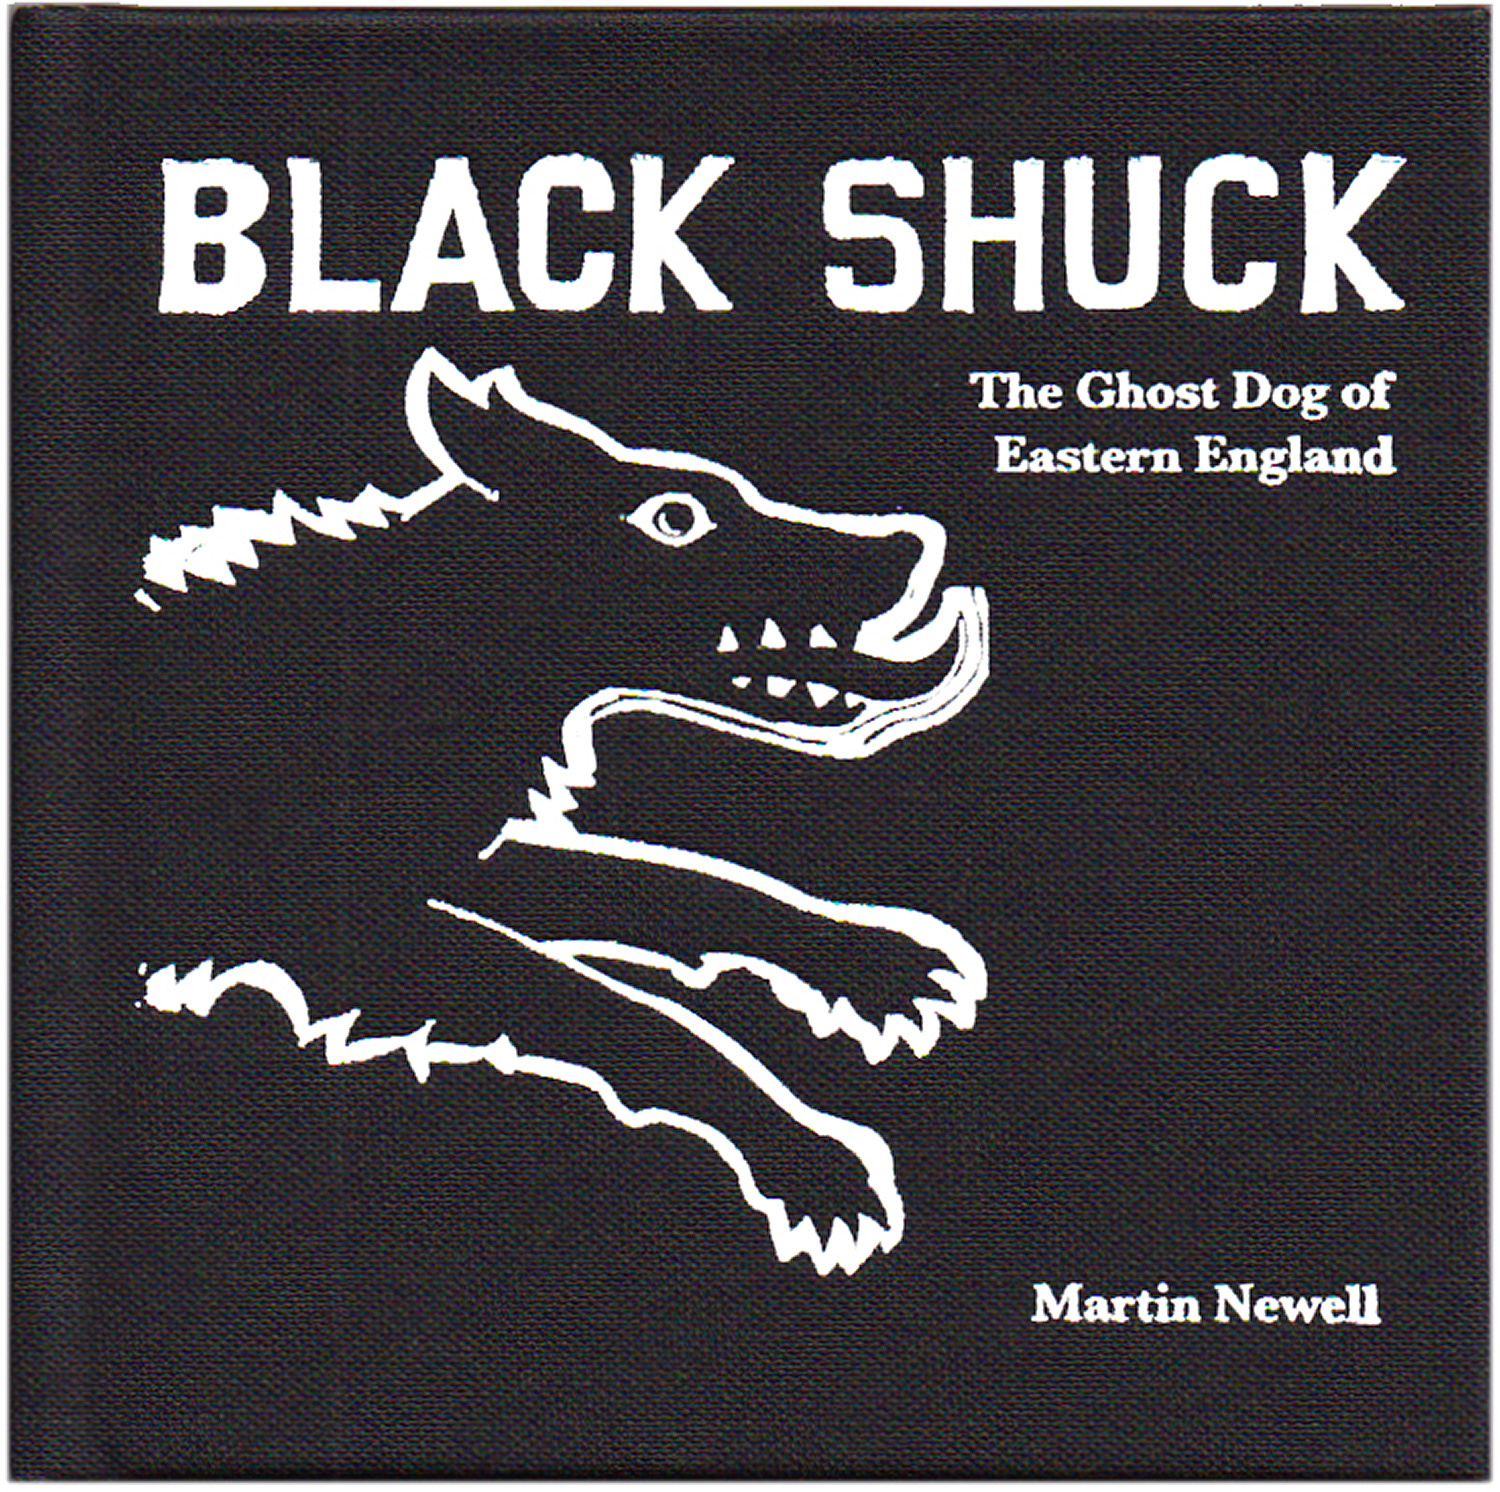 Black Shuck by Martin Newell